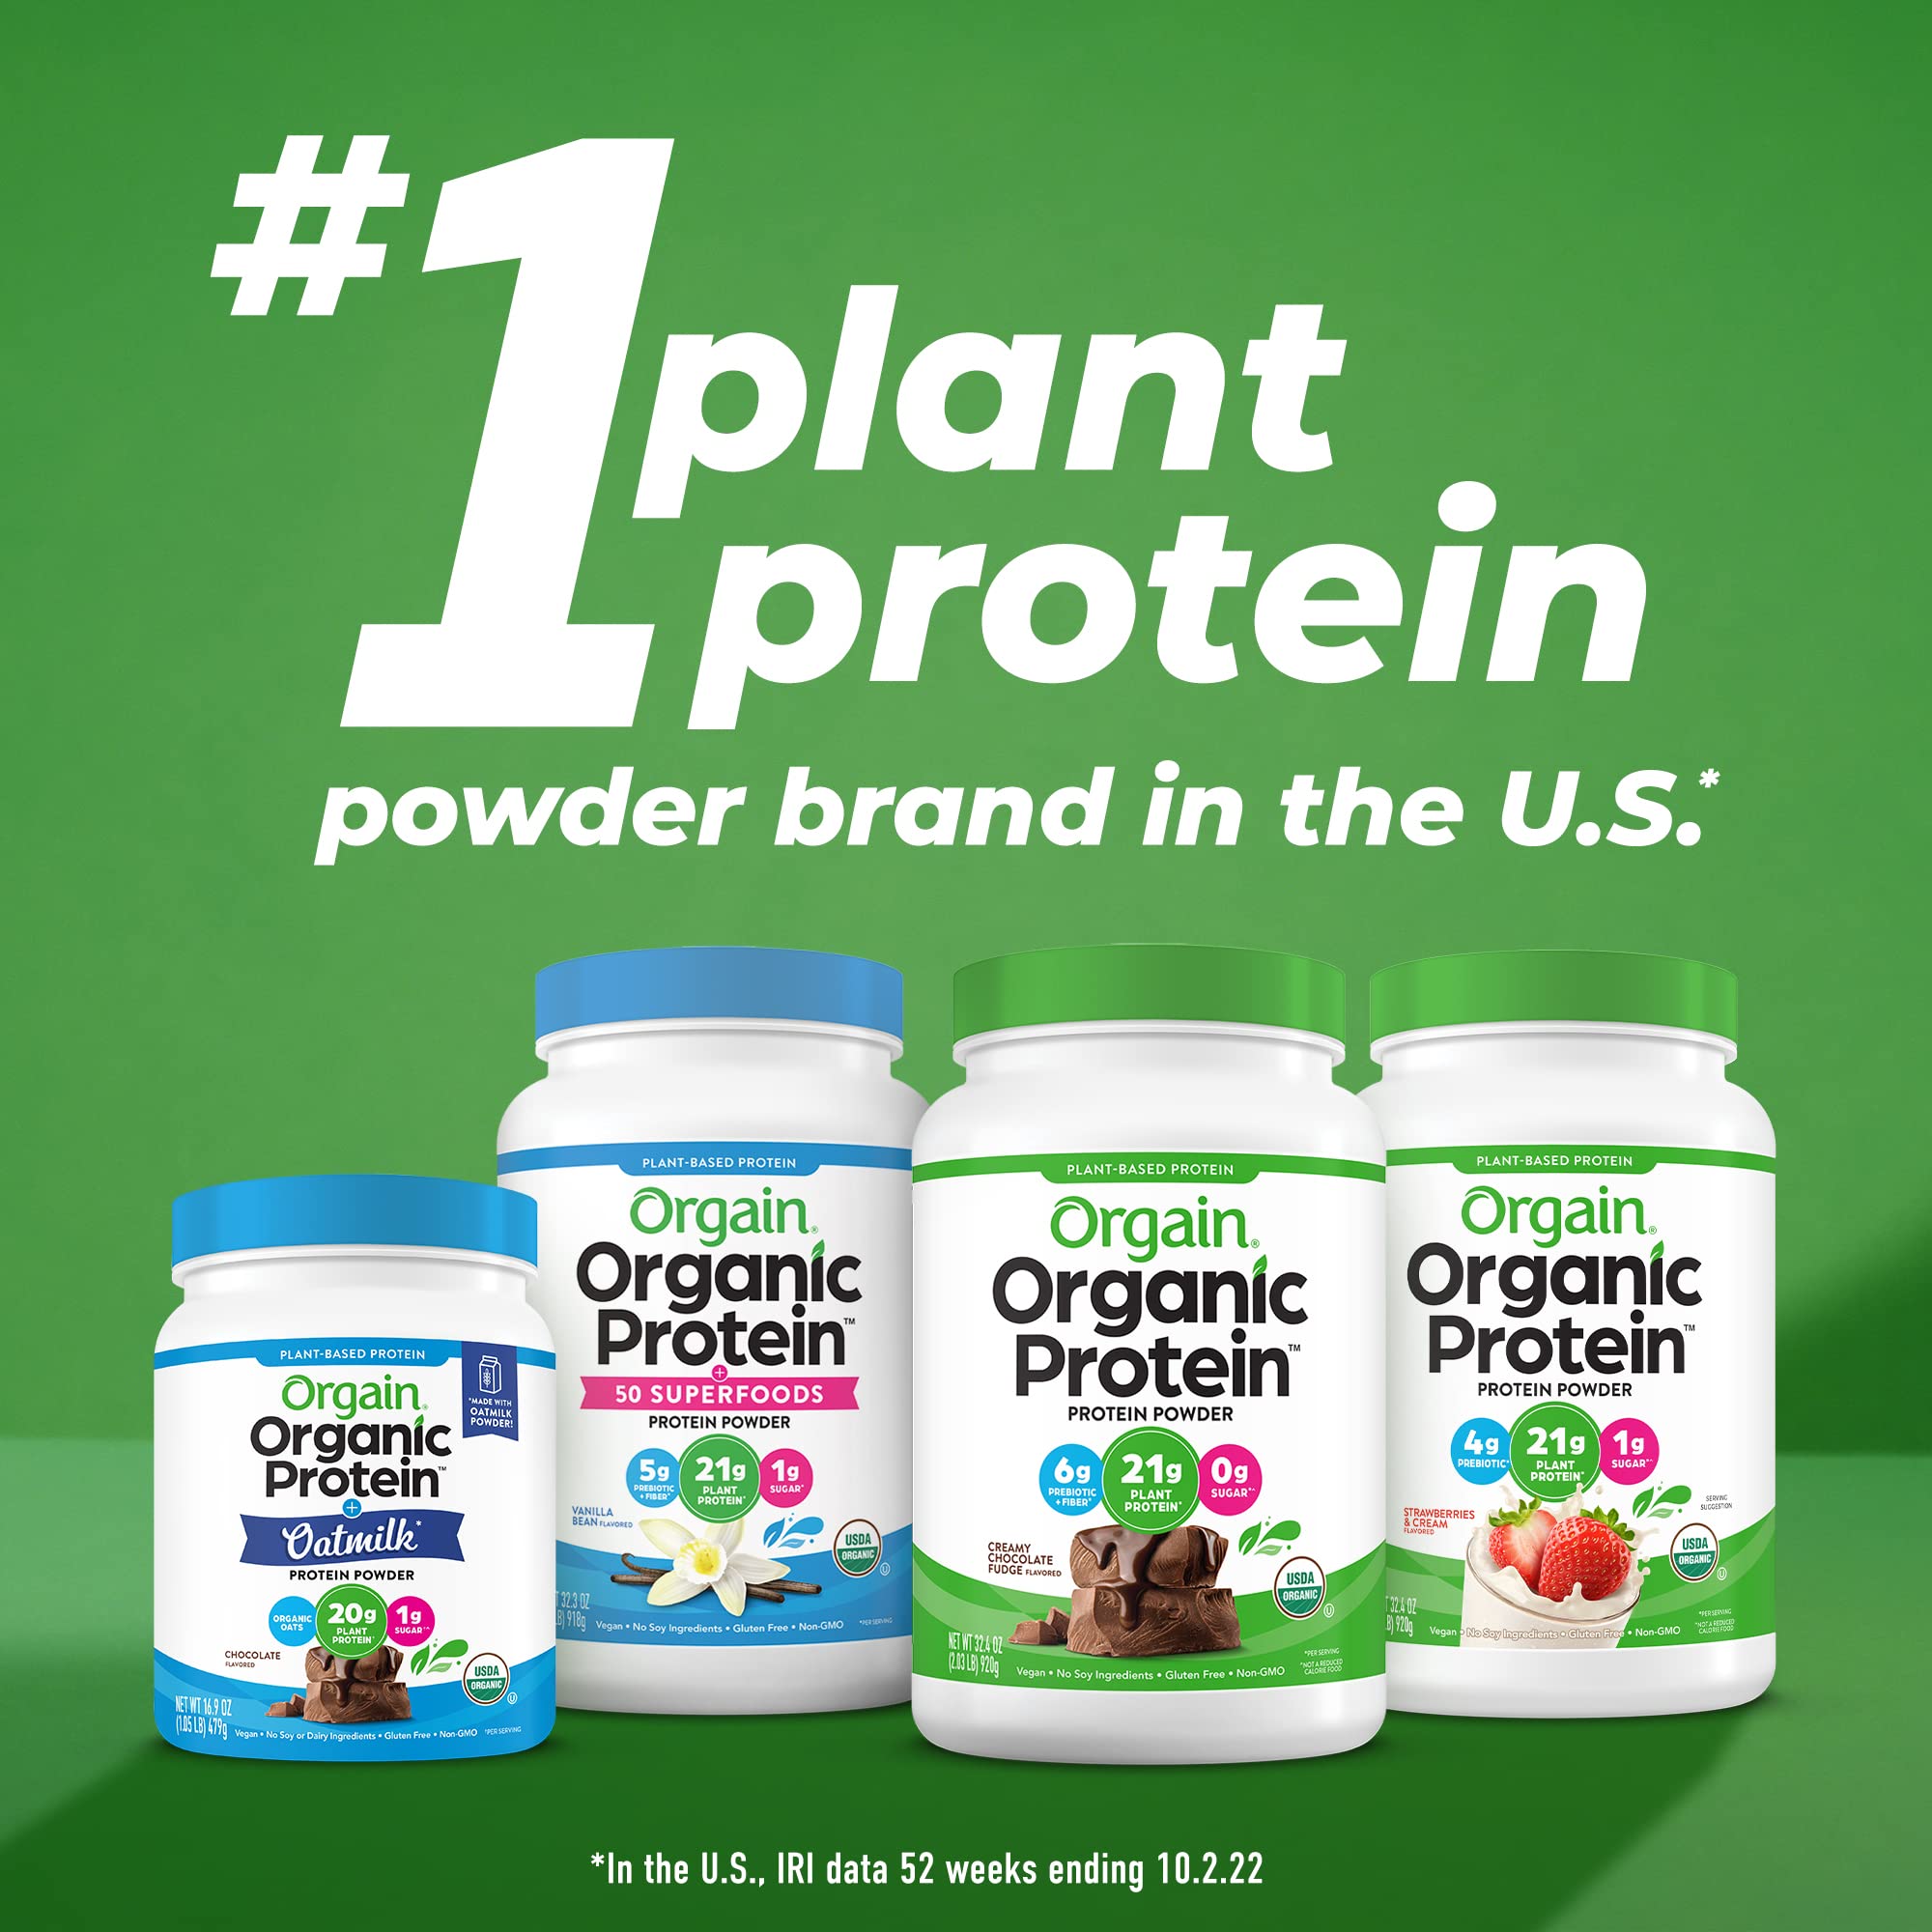 Orgain Organic Vegan Protein Powder + Oat Milk, Vanilla Bean - 20g Plant Based Protein with Milk from Oats, Gluten Free, Dairy Free, Lactose Free, Soy Free, Low Sugar, Non GMO, Kosher - 1.05lb